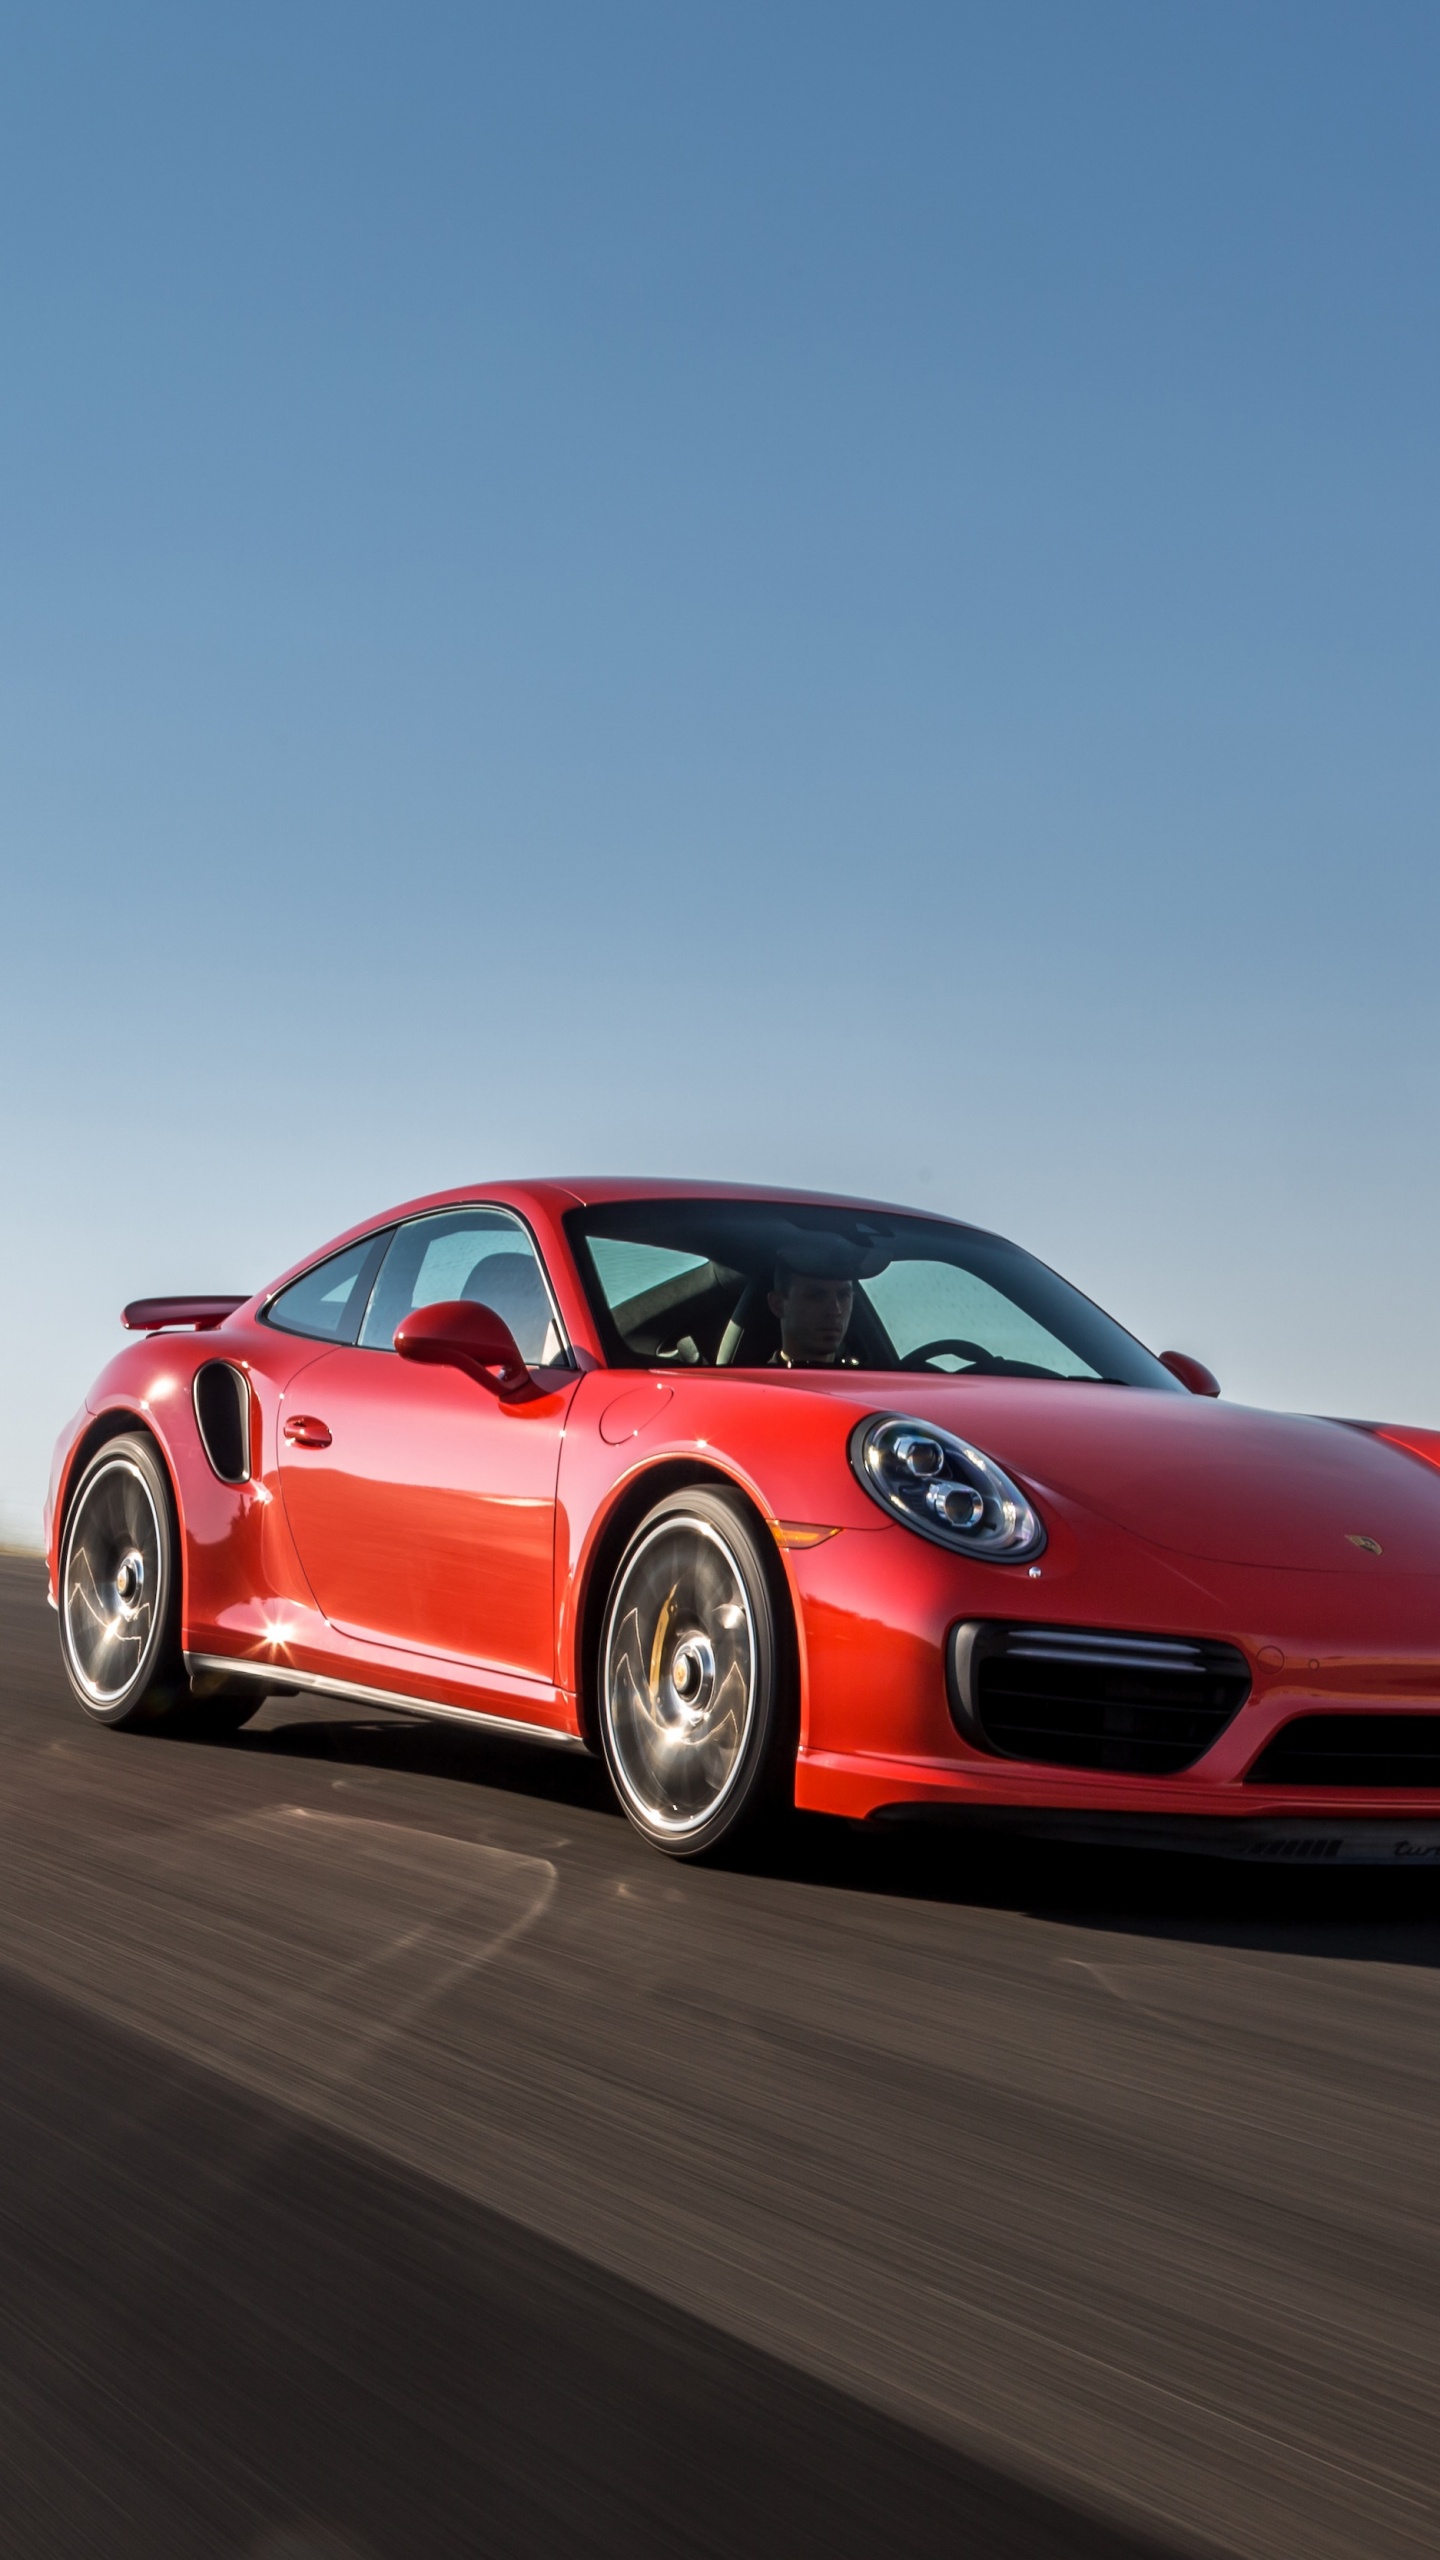 Red Porsche 911 on Road During Daytime. Wallpaper in 1440x2560 Resolution